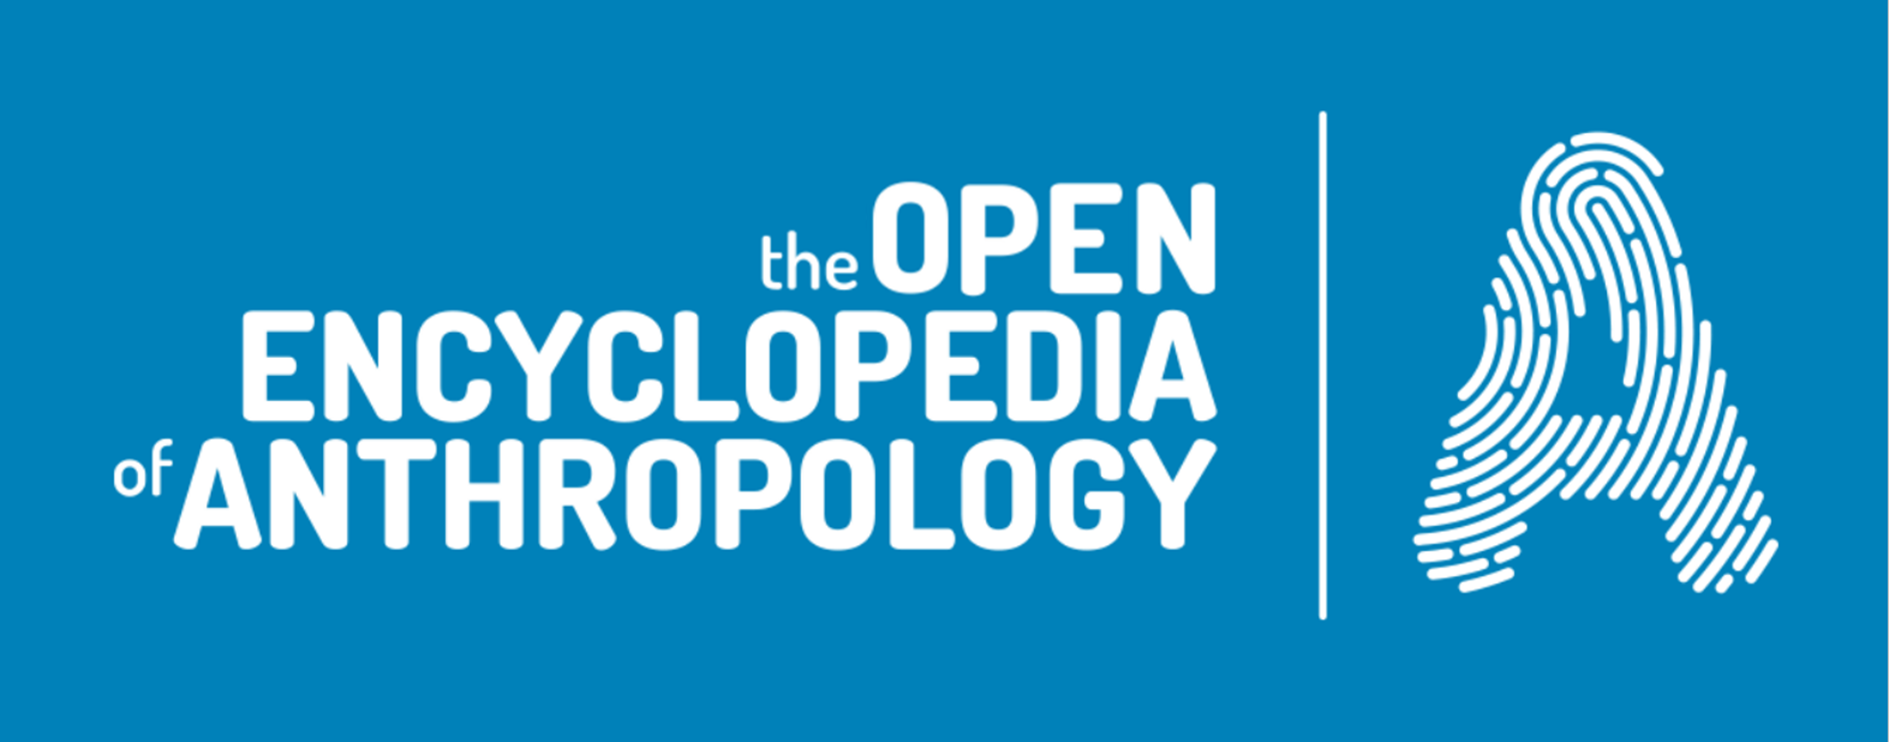 Open Encyclopedia of Anthropology logo